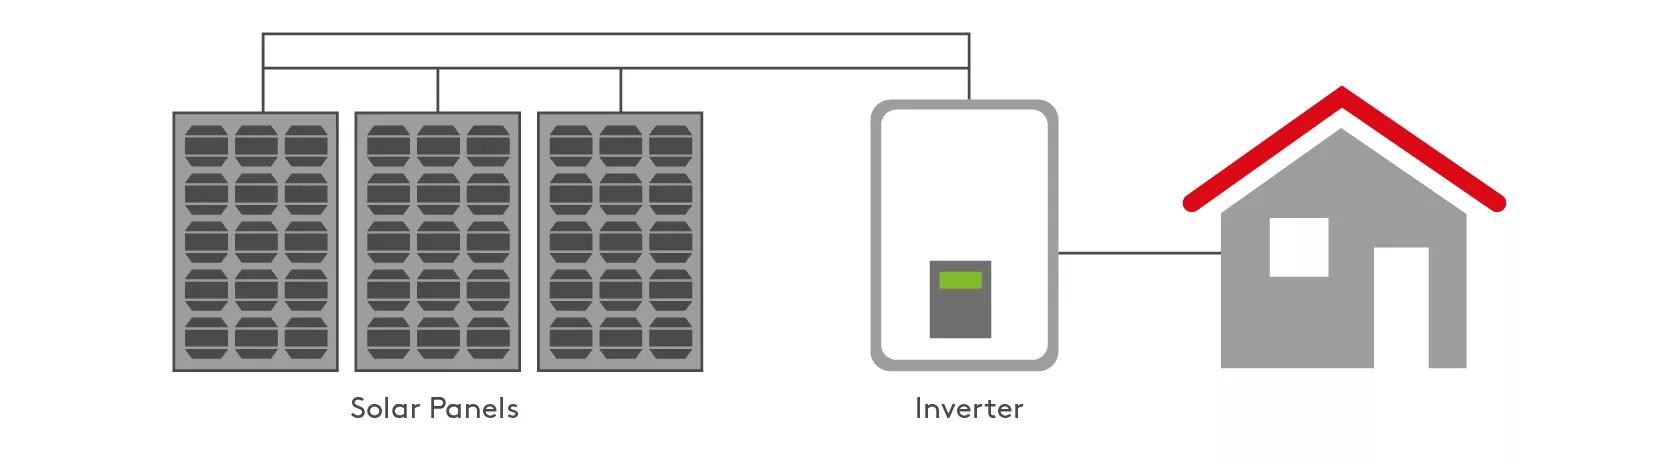 Explained: How Does a Solar or PV Inverter Work? - SolarQuarter